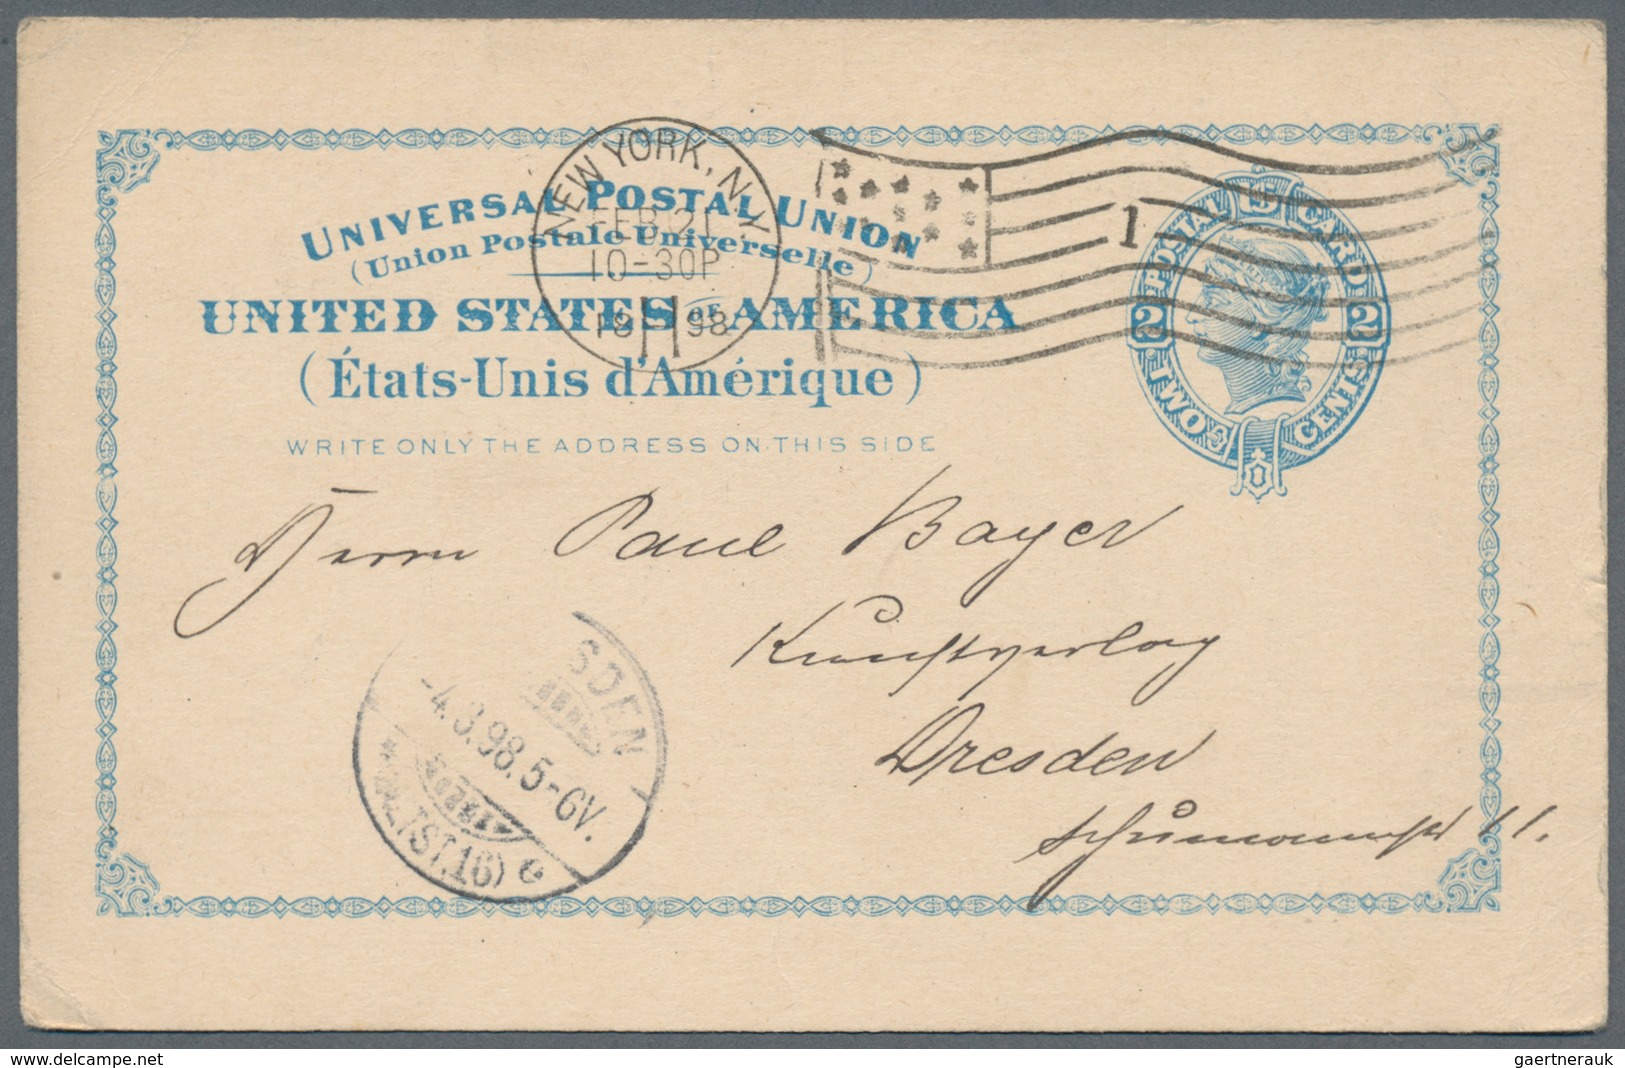 Vereinigte Staaten von Amerika - Ganzsachen: 1875/98 research holding from a specialized collector o